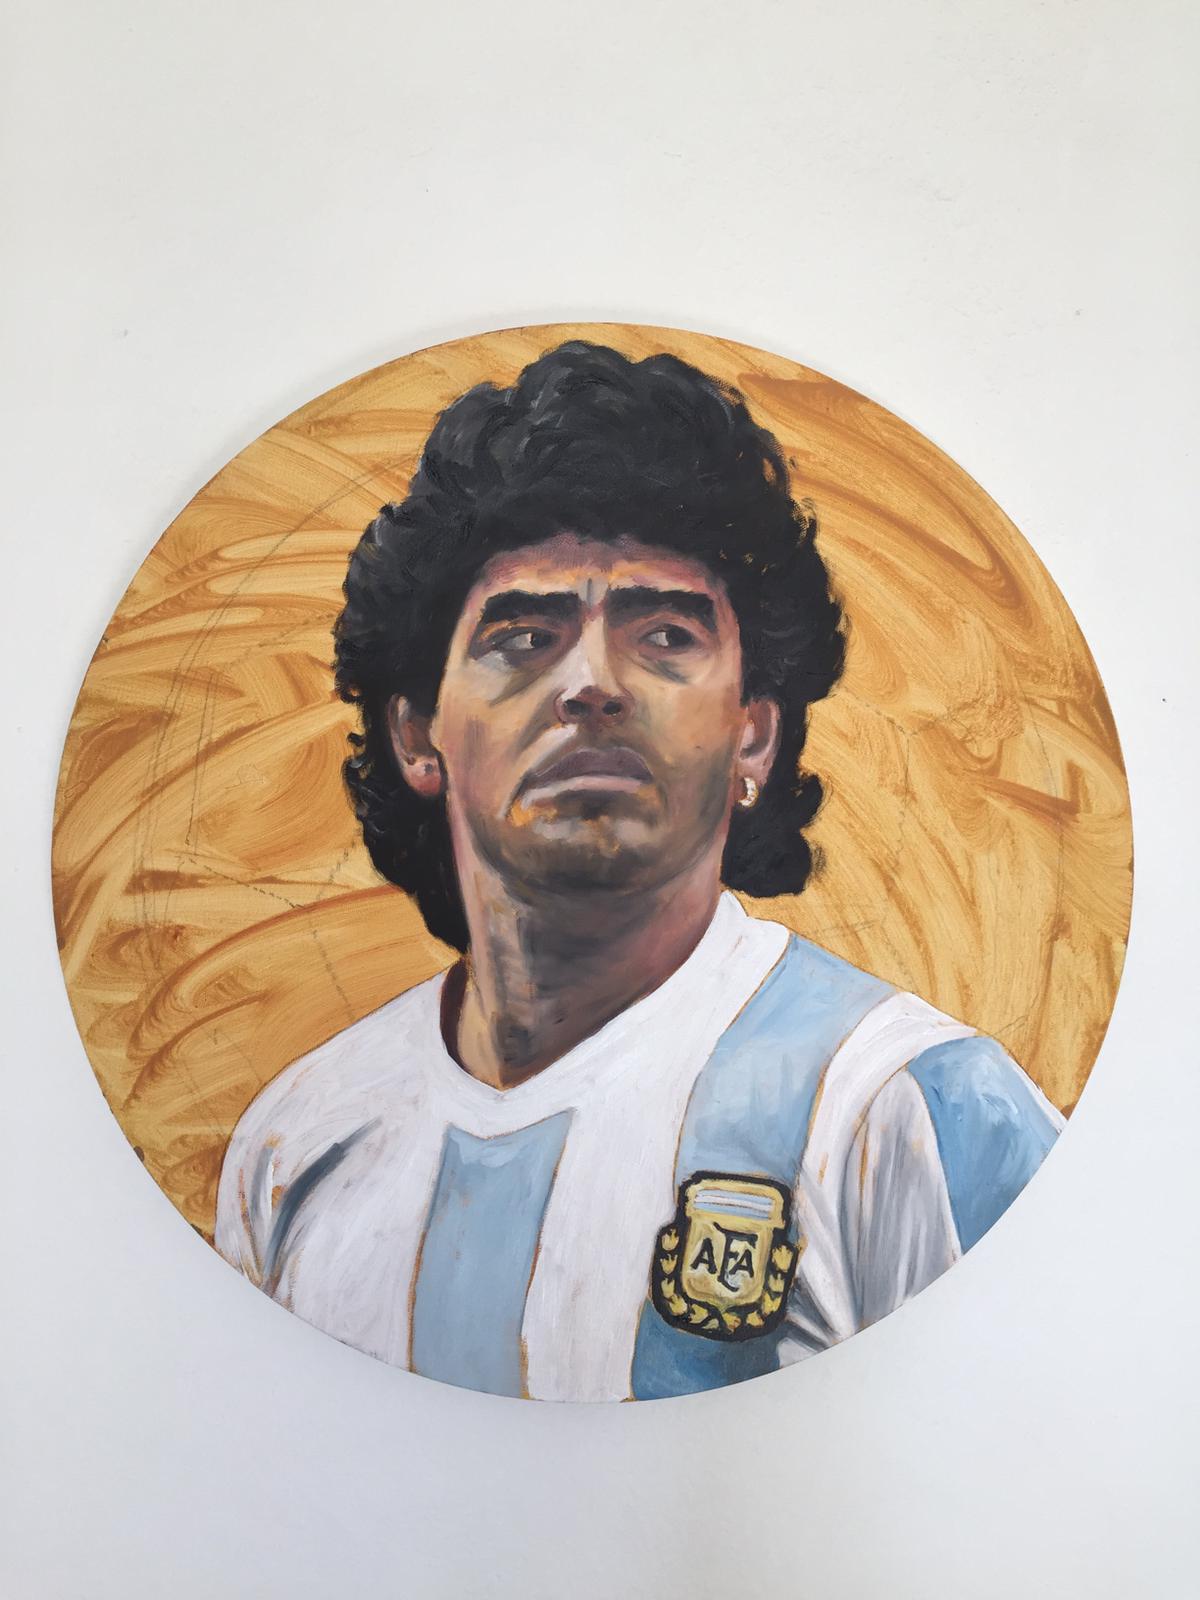 Painting of Maradona